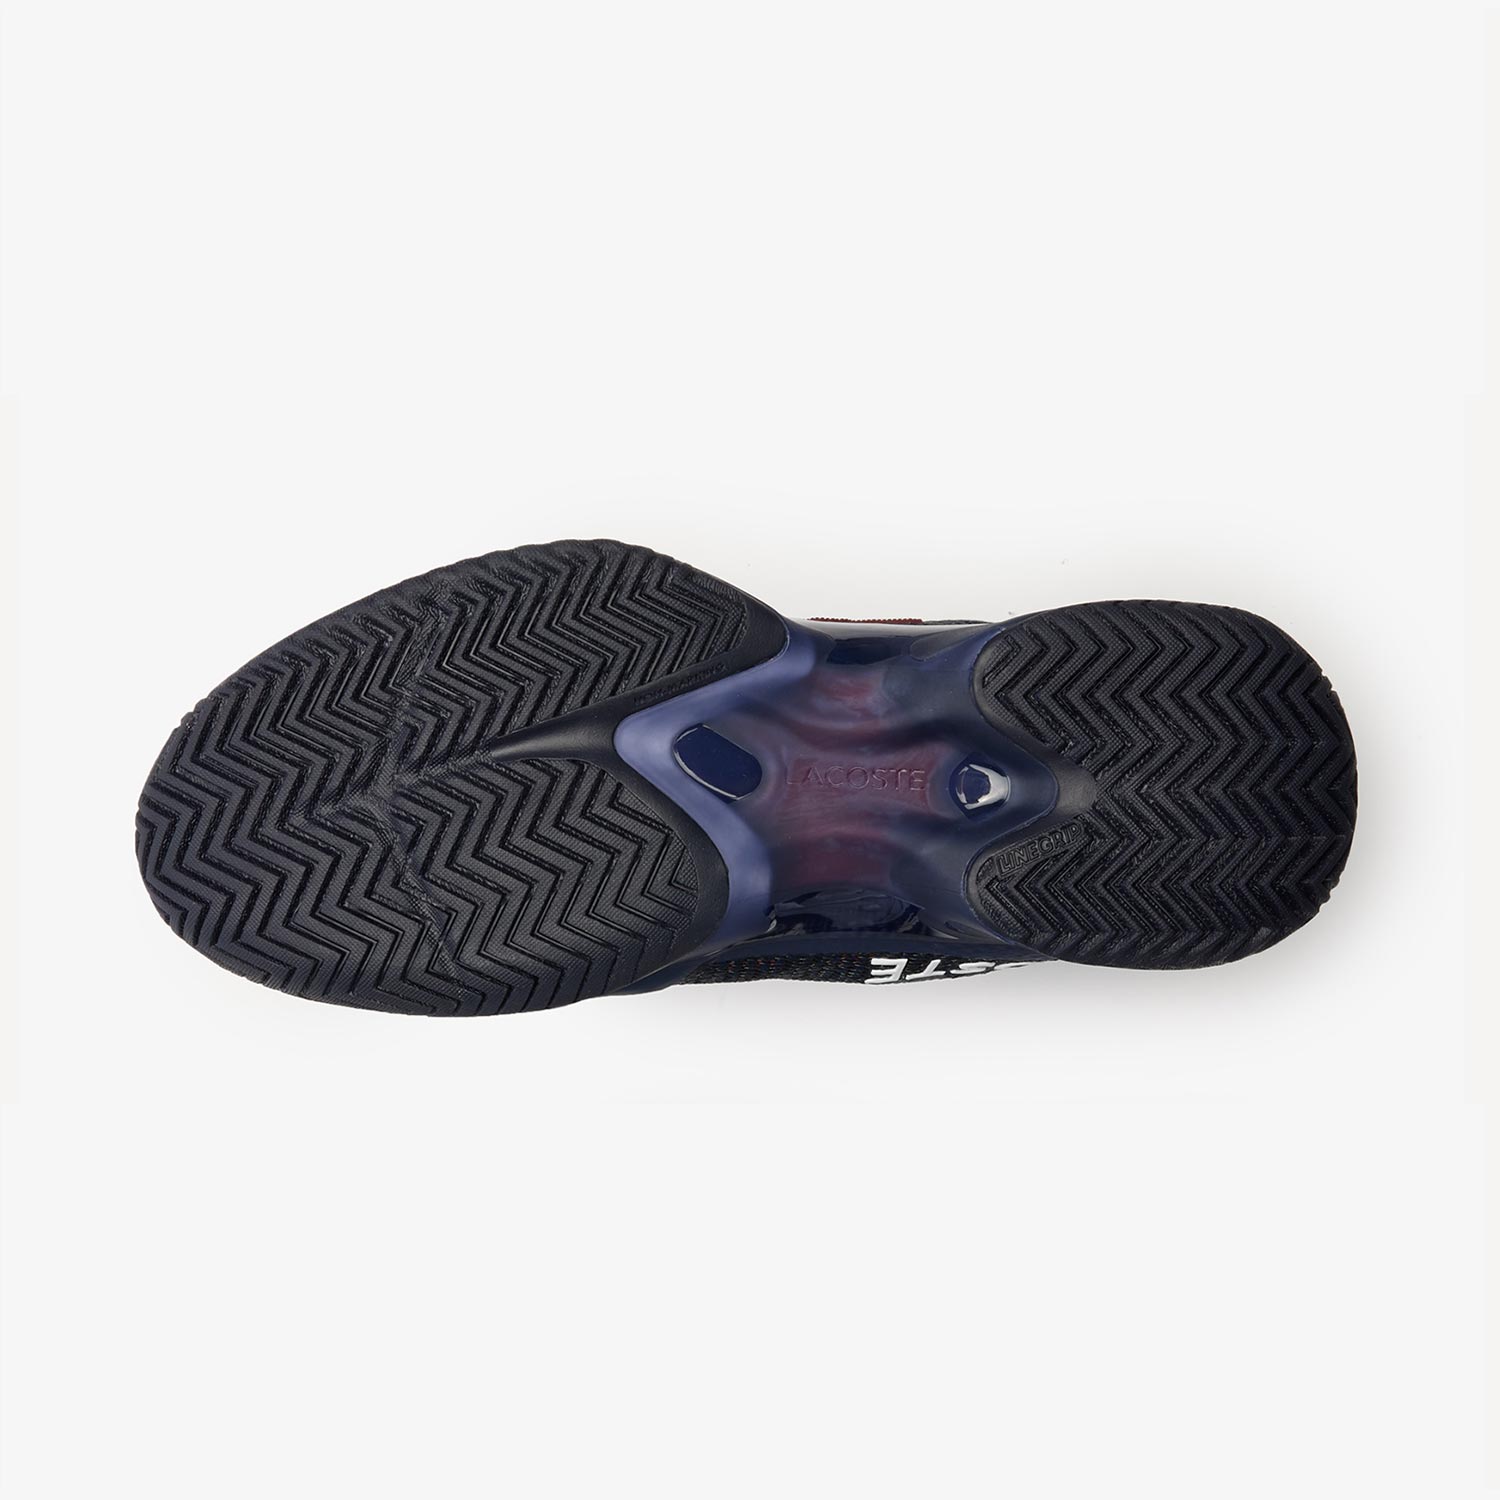 Lacoste AG-LT23 Ultra Men's Tennis Shoes - Dark Blue (2)